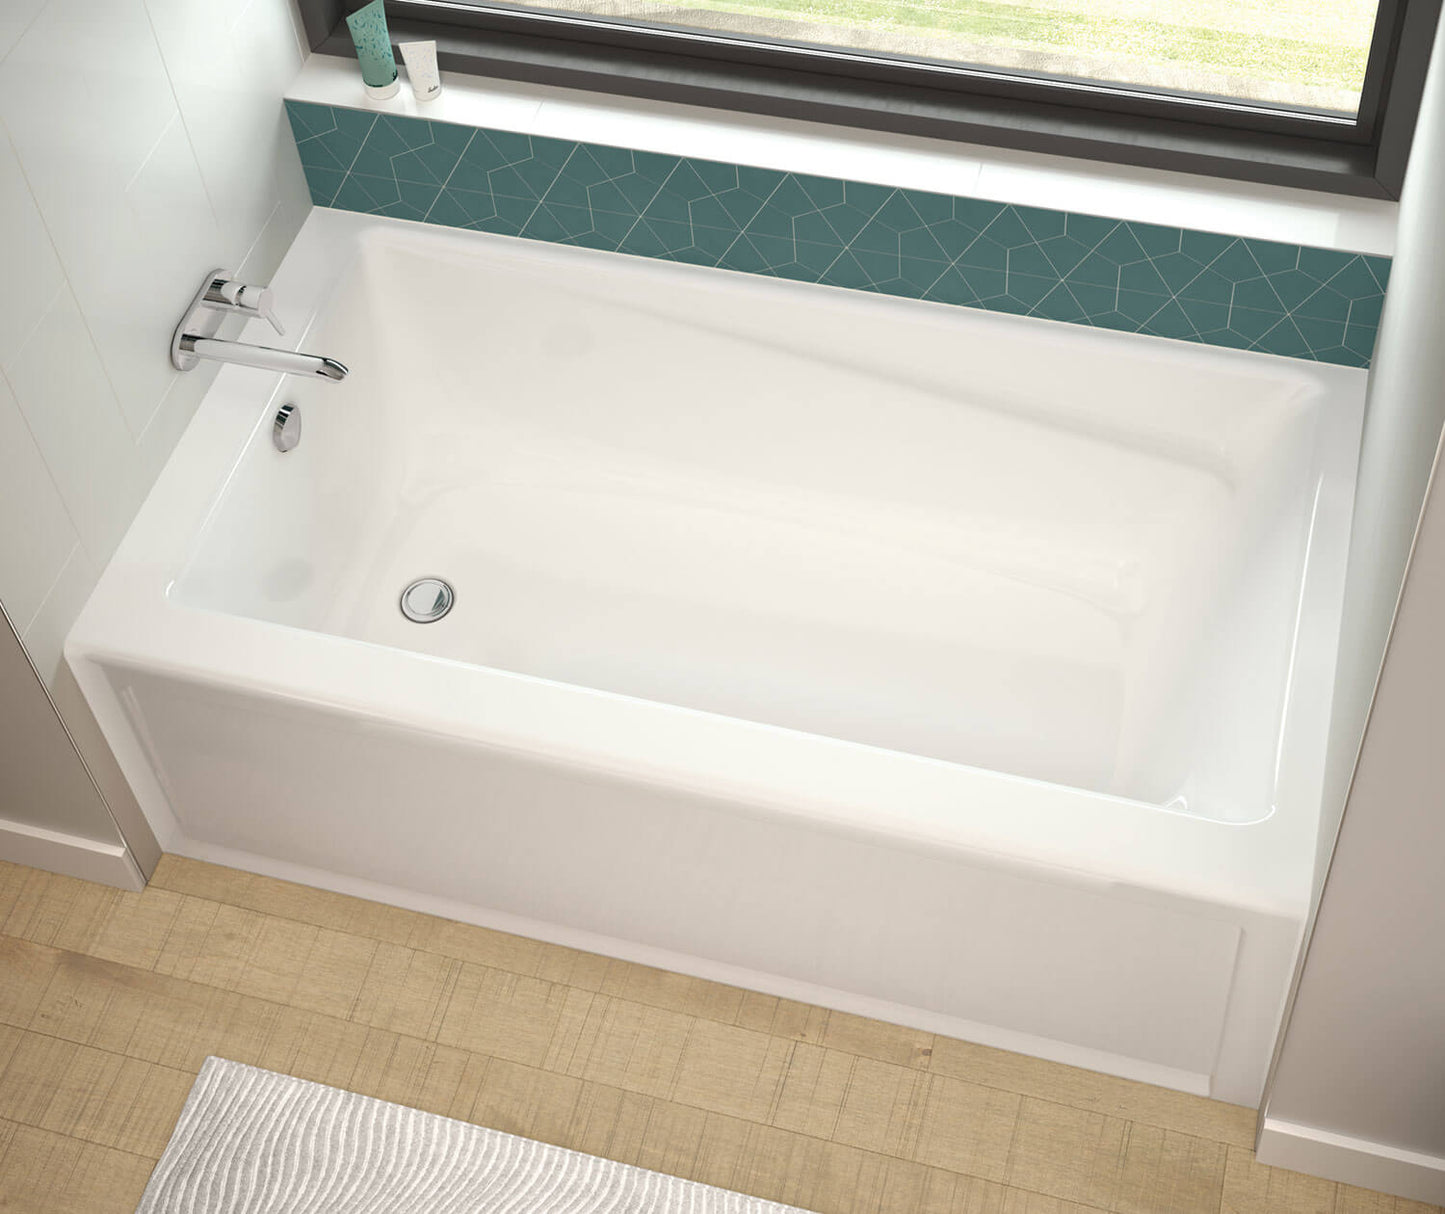 Maax Exhibit 6030 IFS AFR Acrylic Alcove Right-Hand Drain Bathtub in White